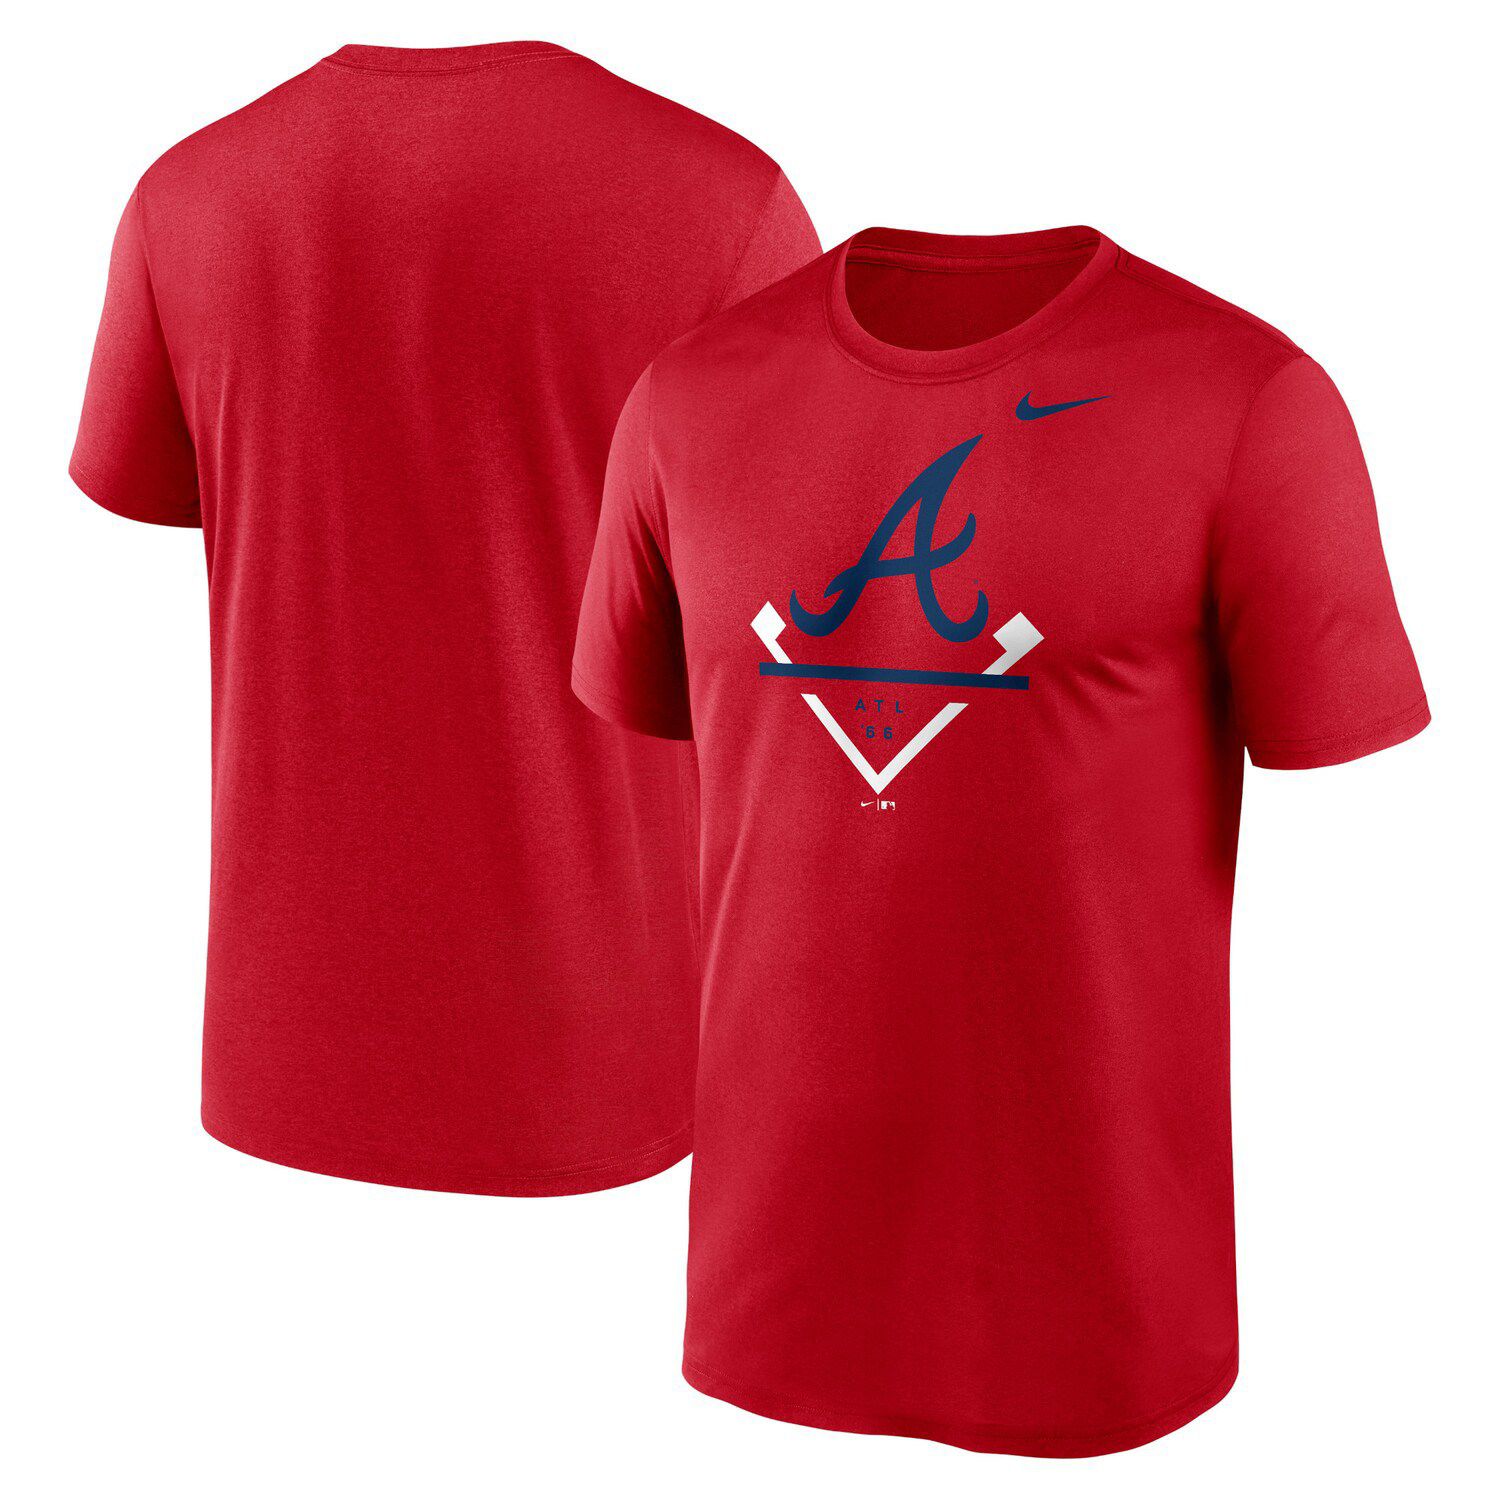 Women's Atlanta Braves Refried Apparel Red Cropped T-Shirt